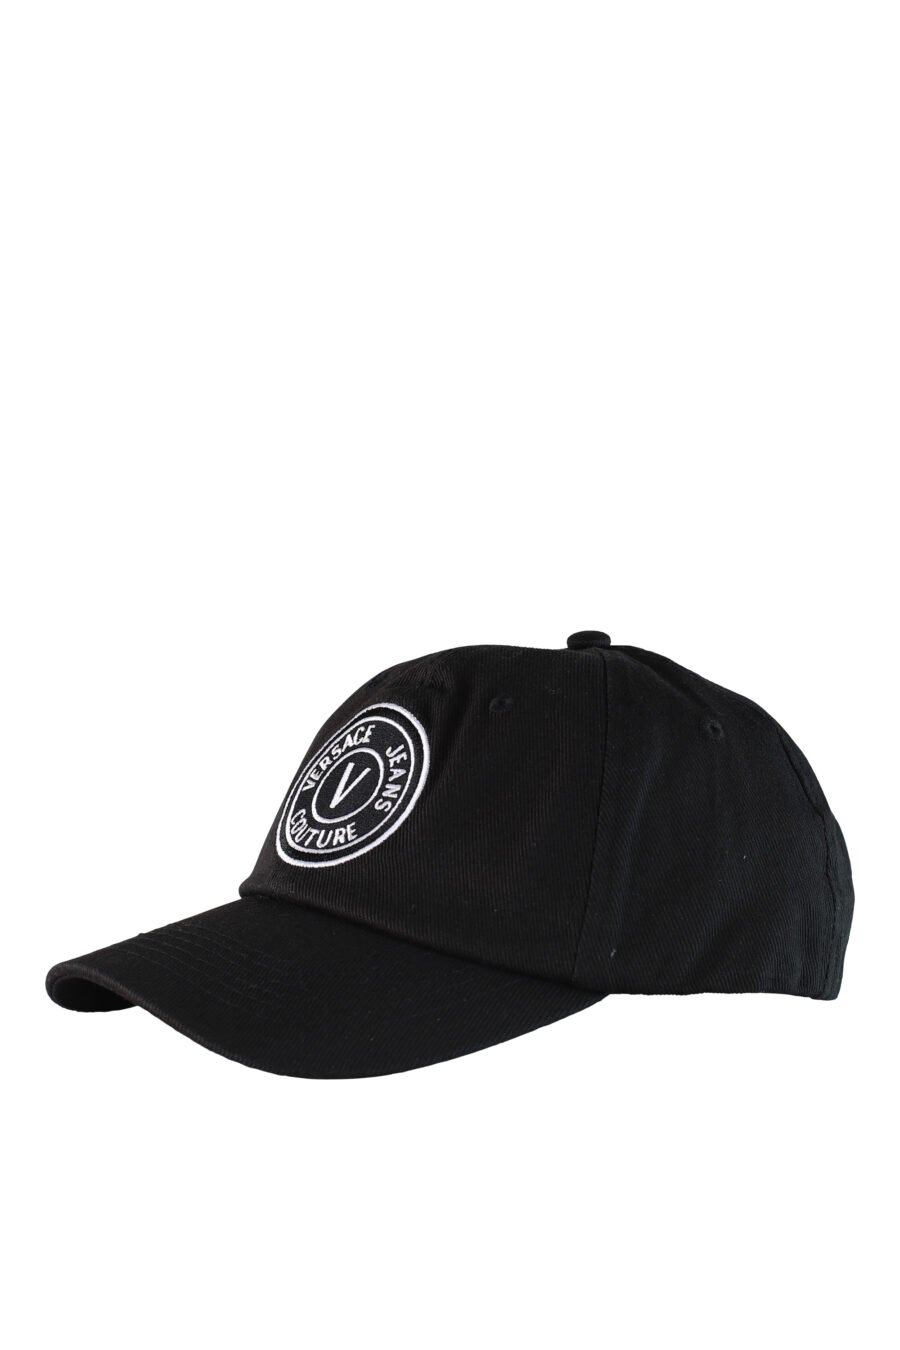 Schwarze Kappe mit weißem kreisförmigen Logo - IMG 0506